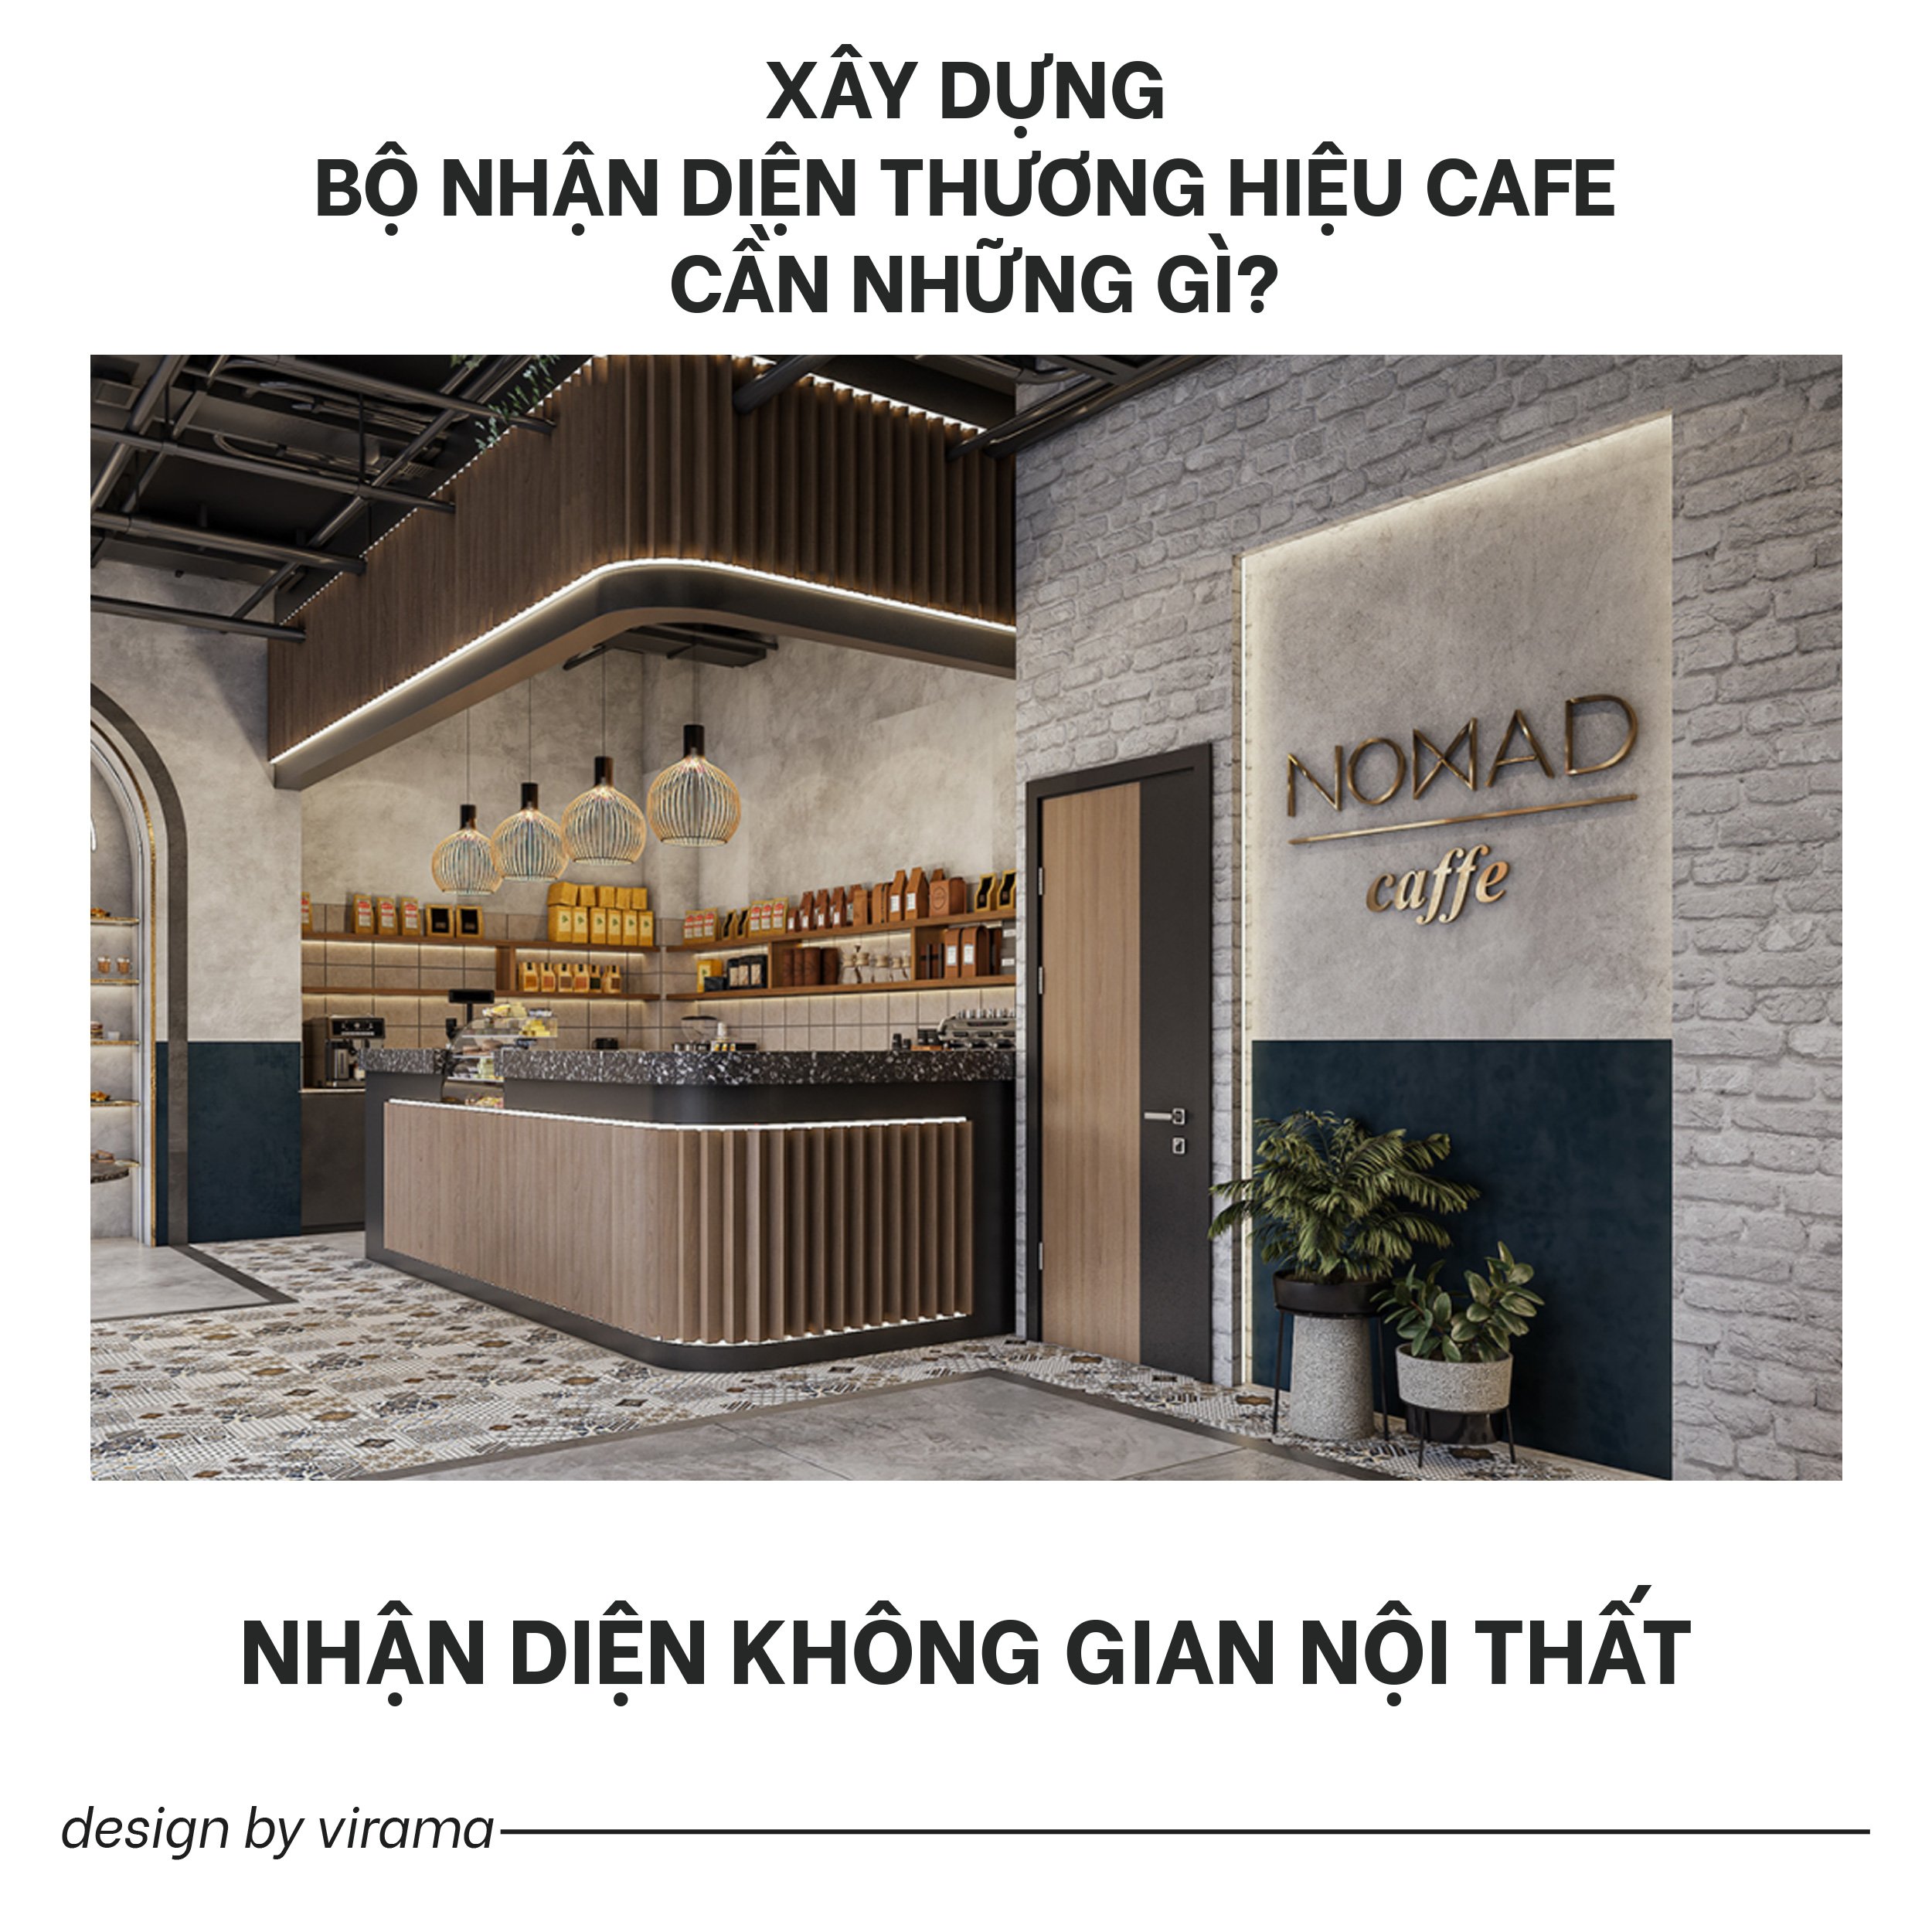 bo-nhan-dien-thuong-hieu-cafe-4